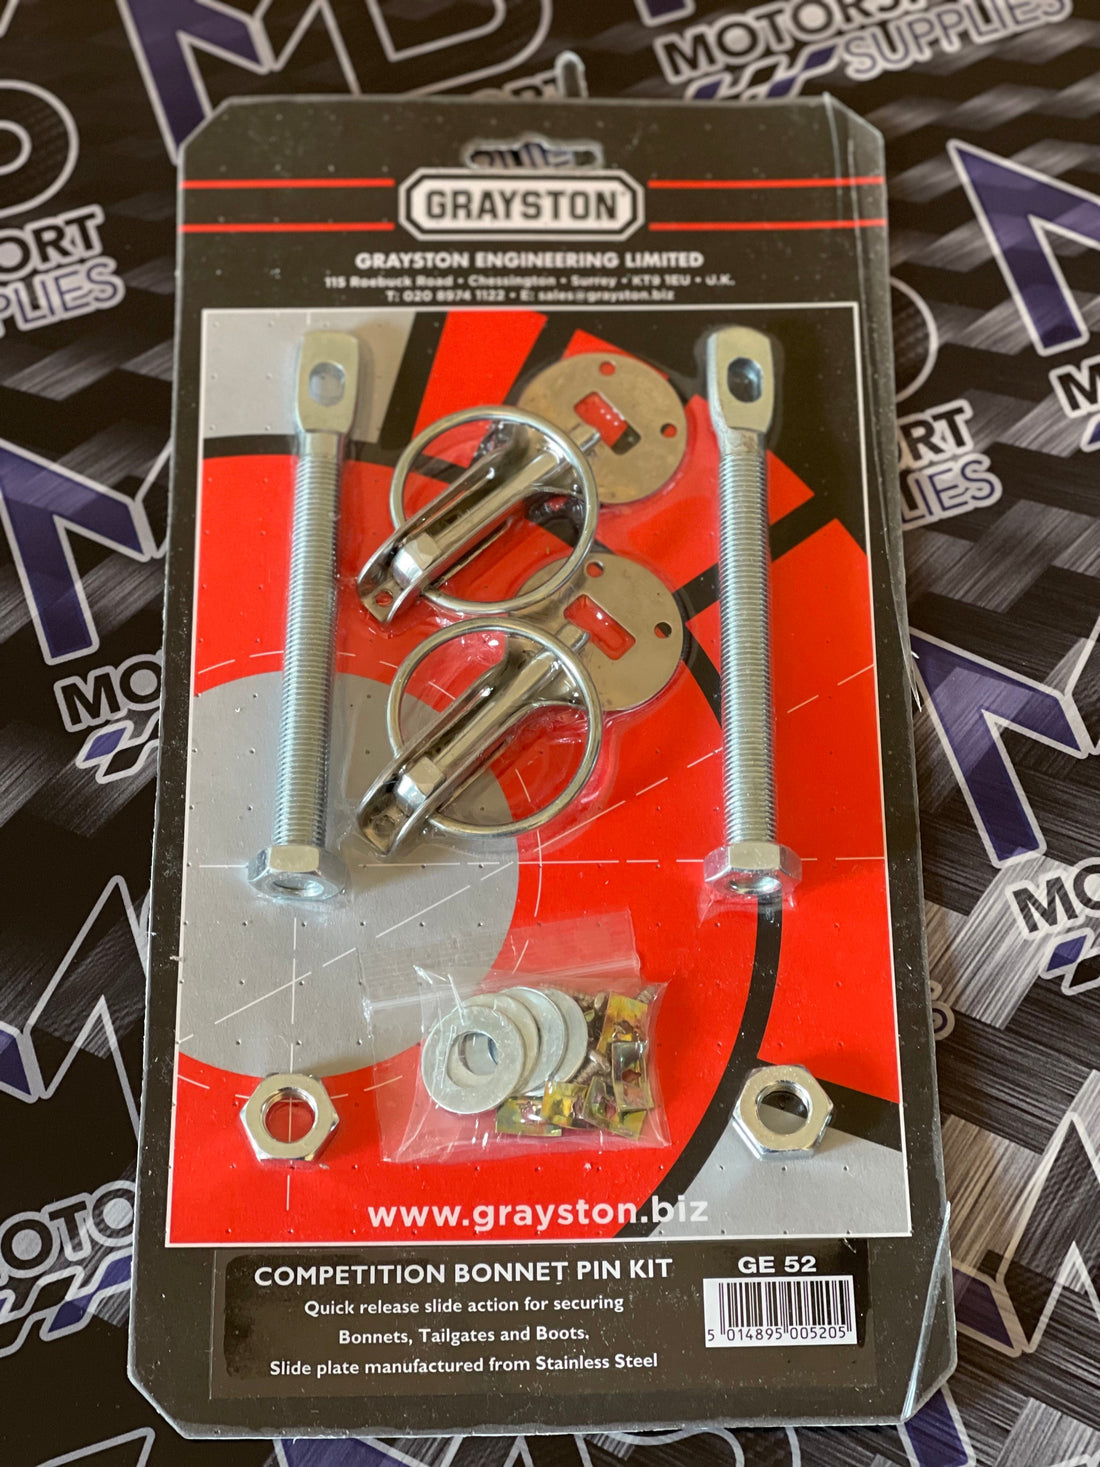 Motorsport Supplies - Bonnet Pins and accessories